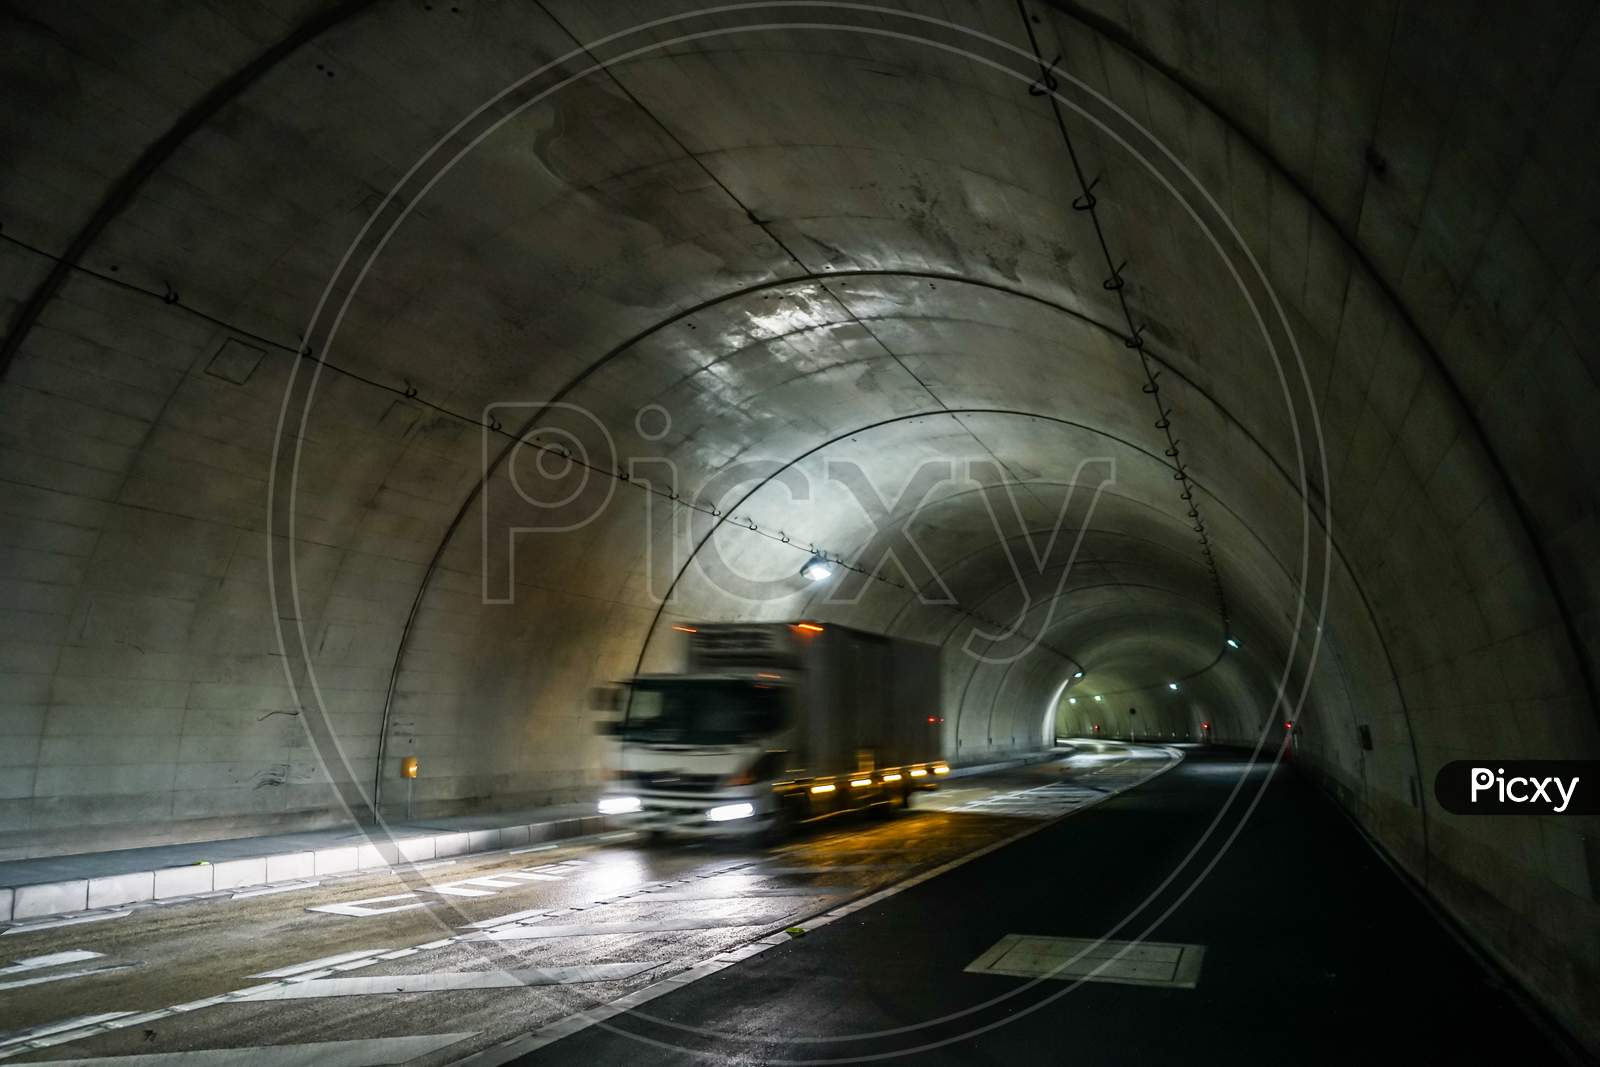 Tunnel Image